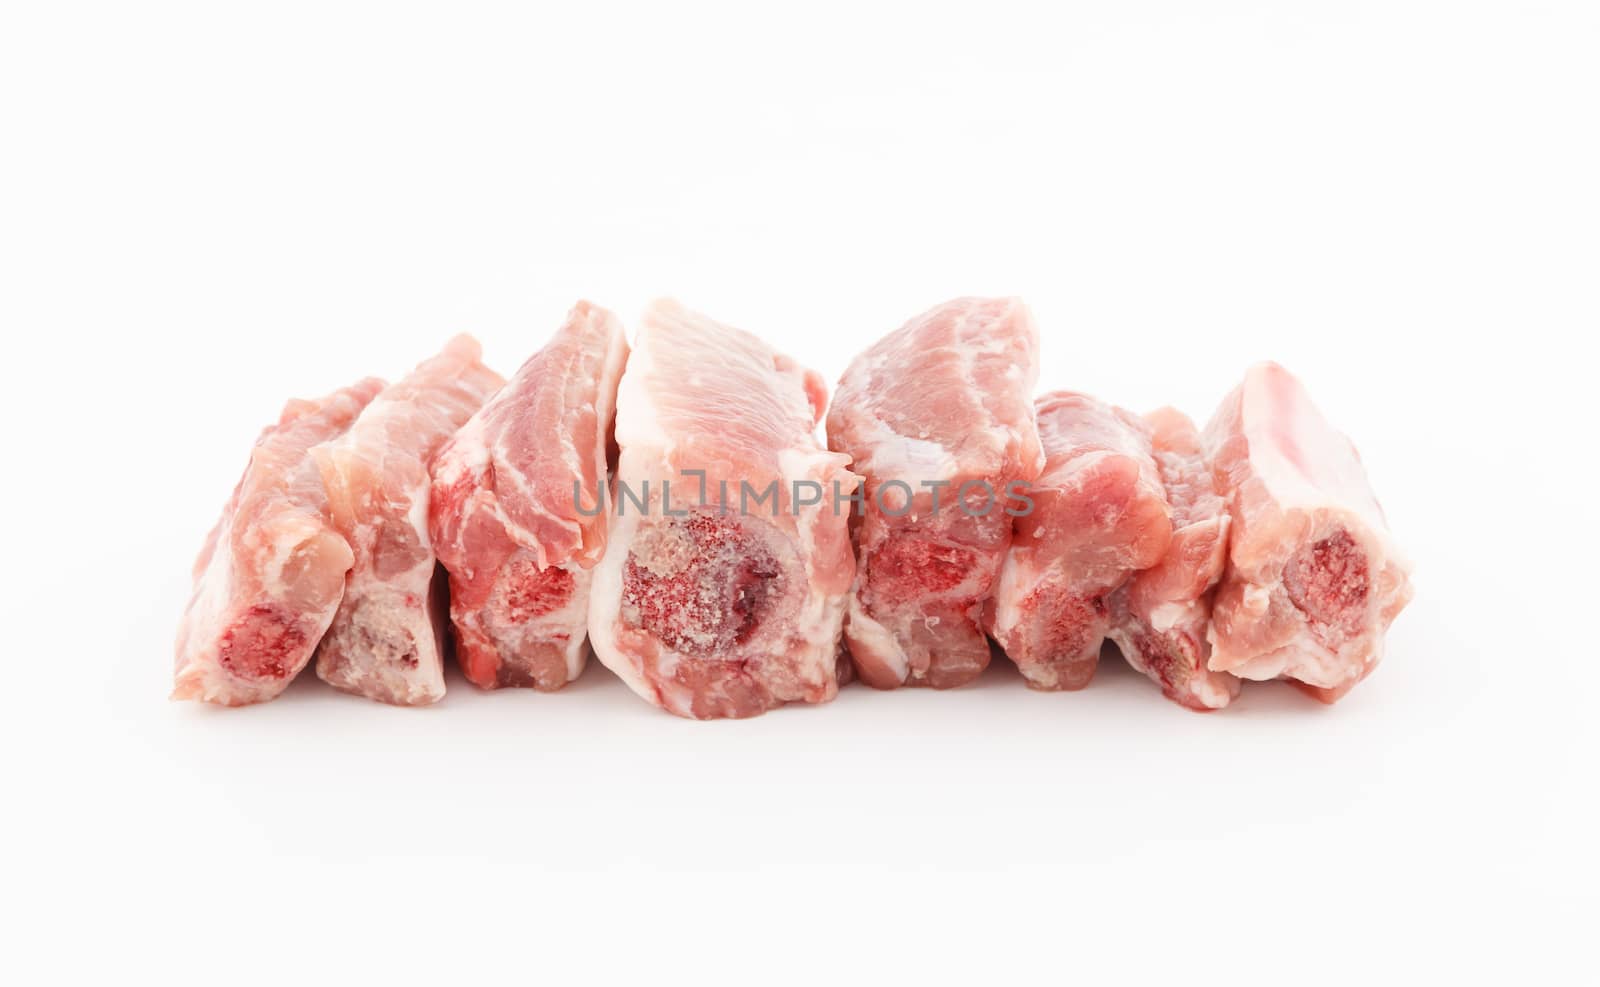 Raw pork ribs on white background by vitawin